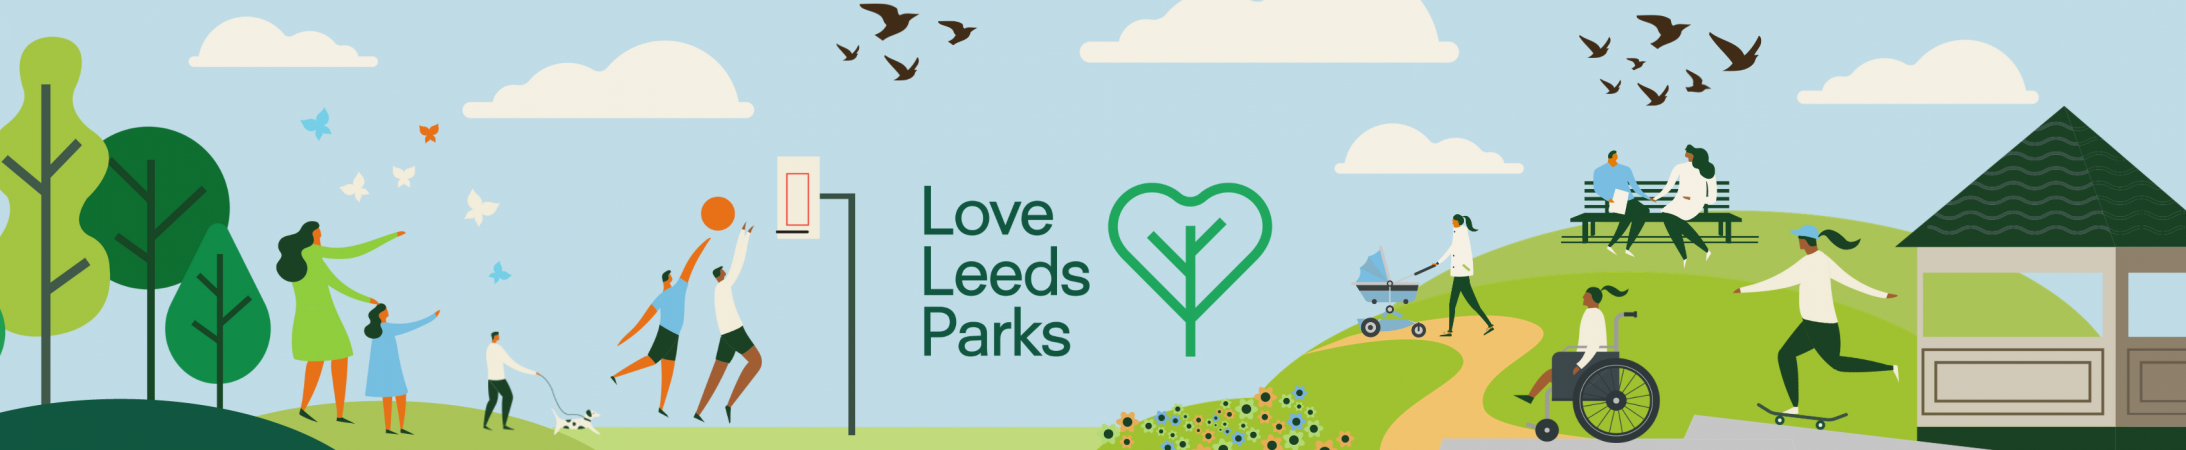 We Love Leeds Parks